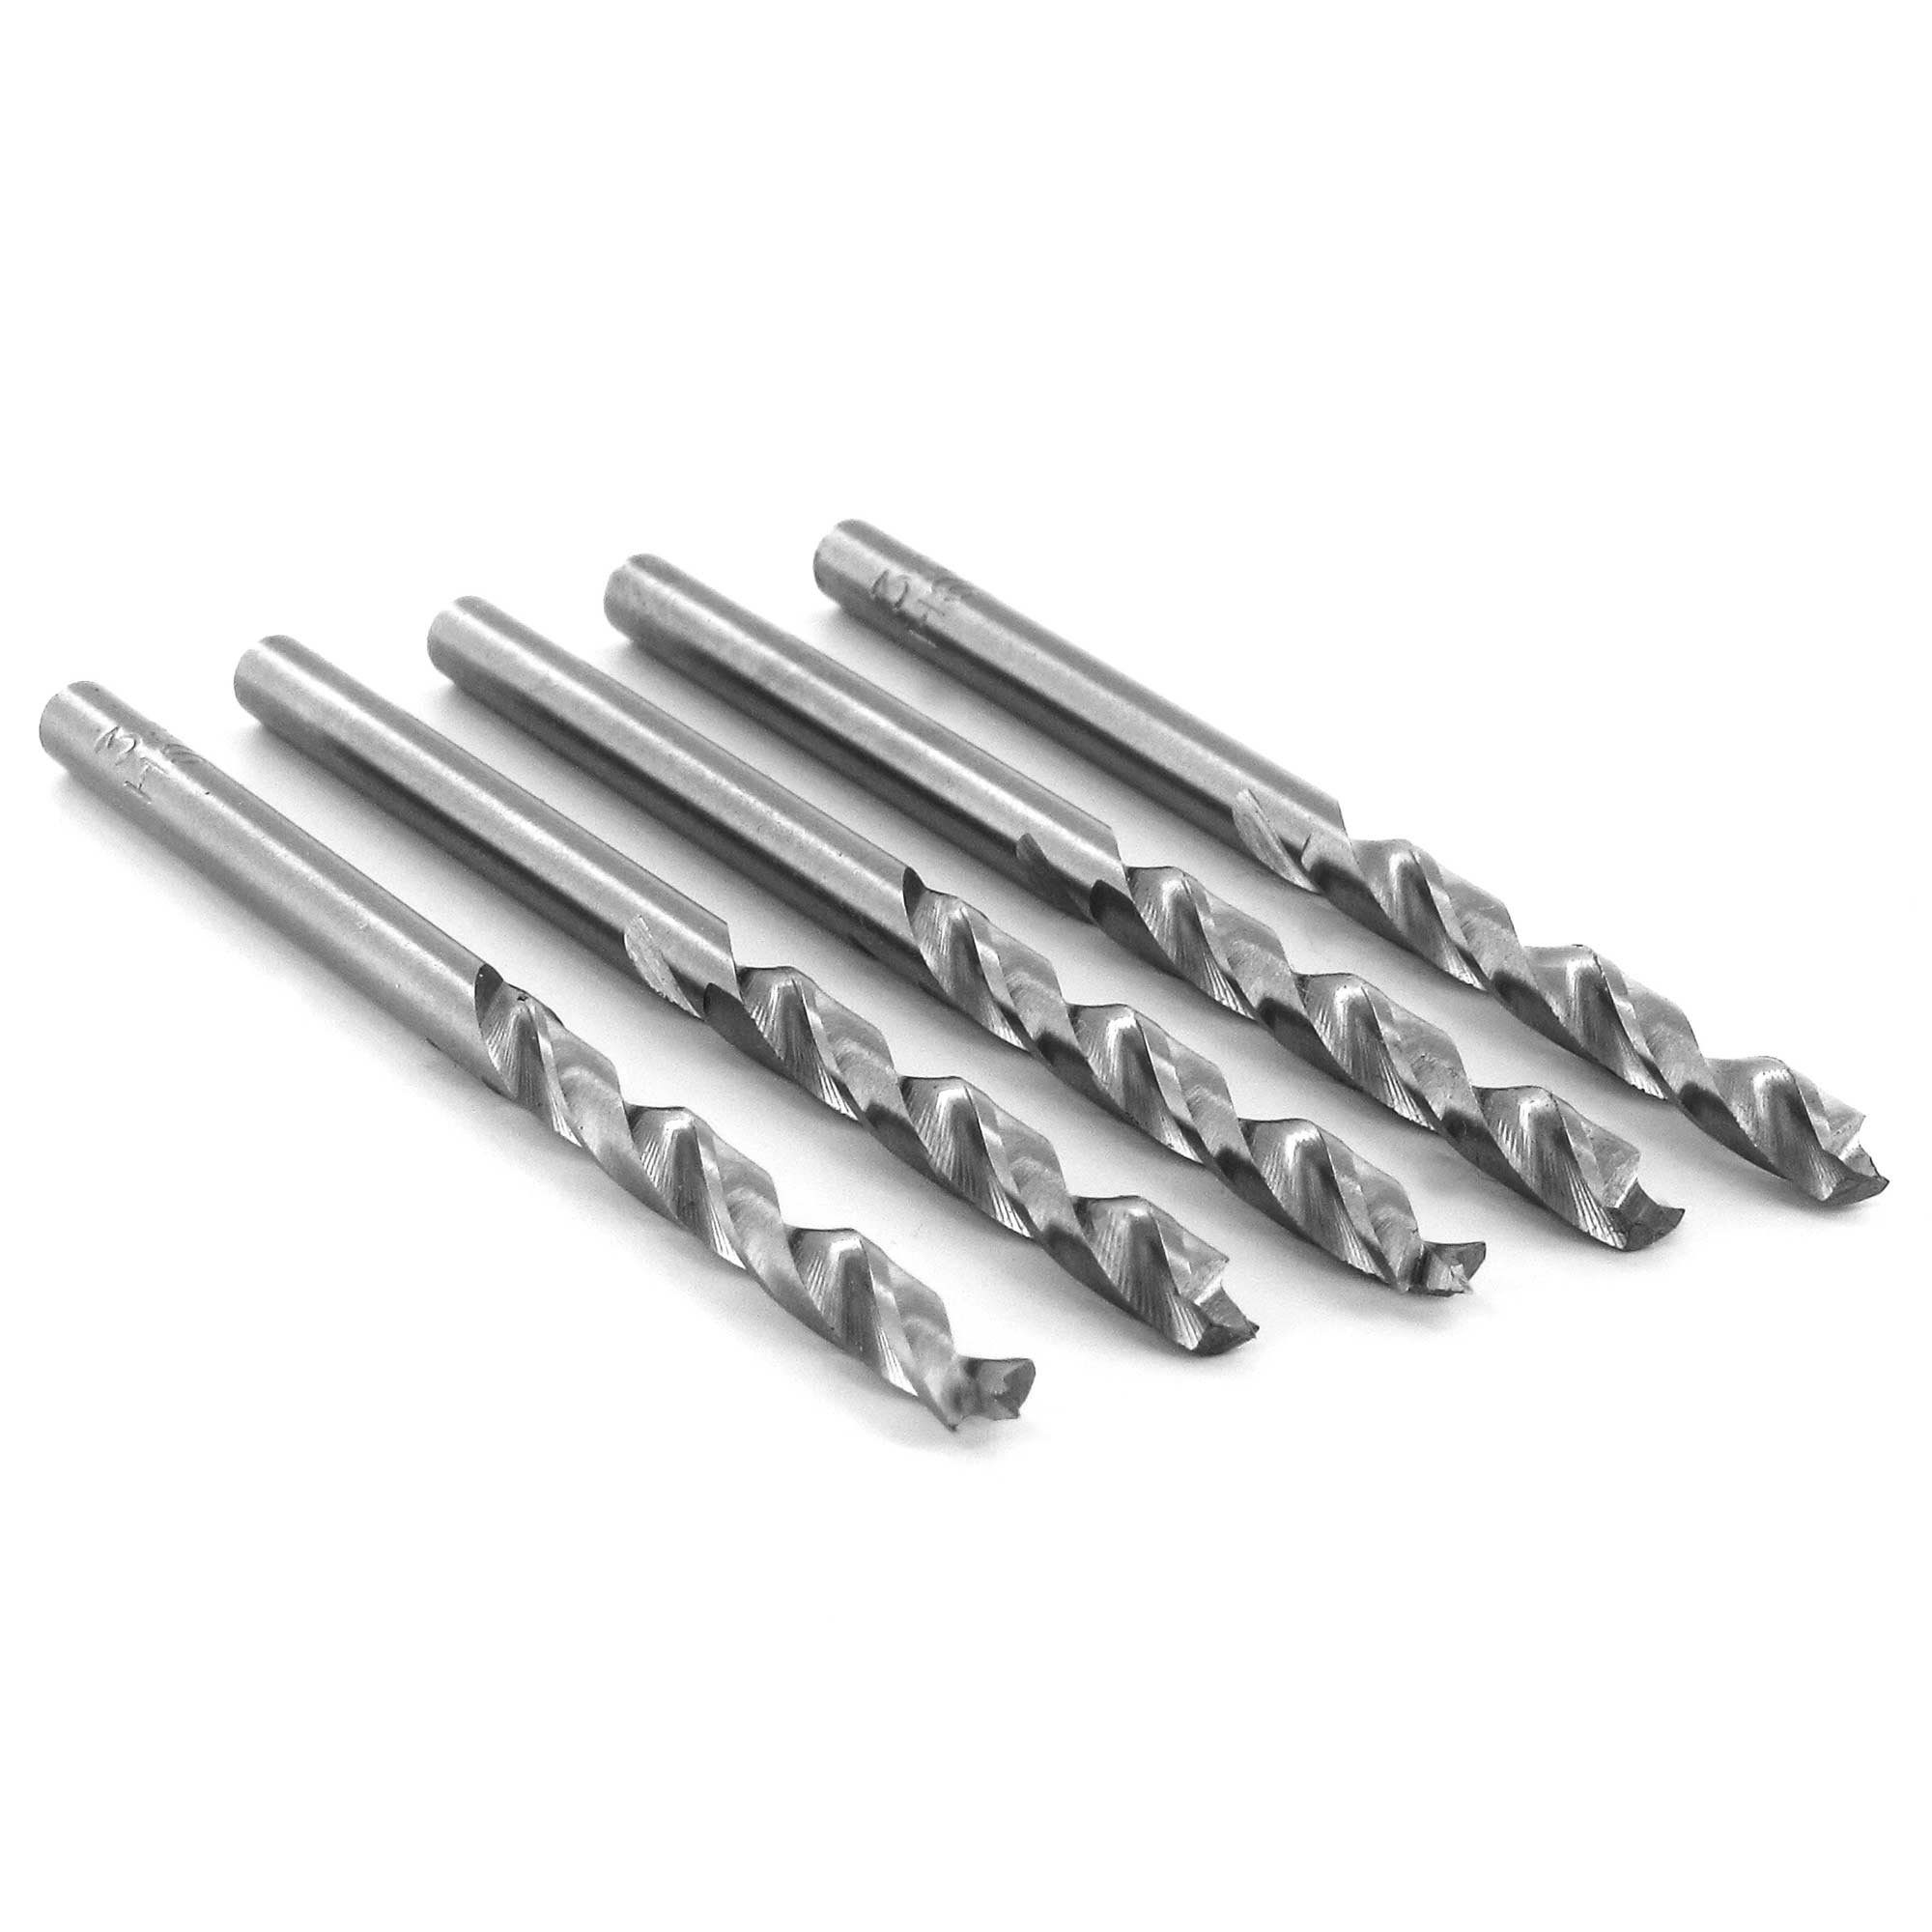 ENT European Norm Tools Spiralbohrer im 5er Pack, Ø 1 - 5 mm, geschliffener Premium HSS Holzspiralbohrer